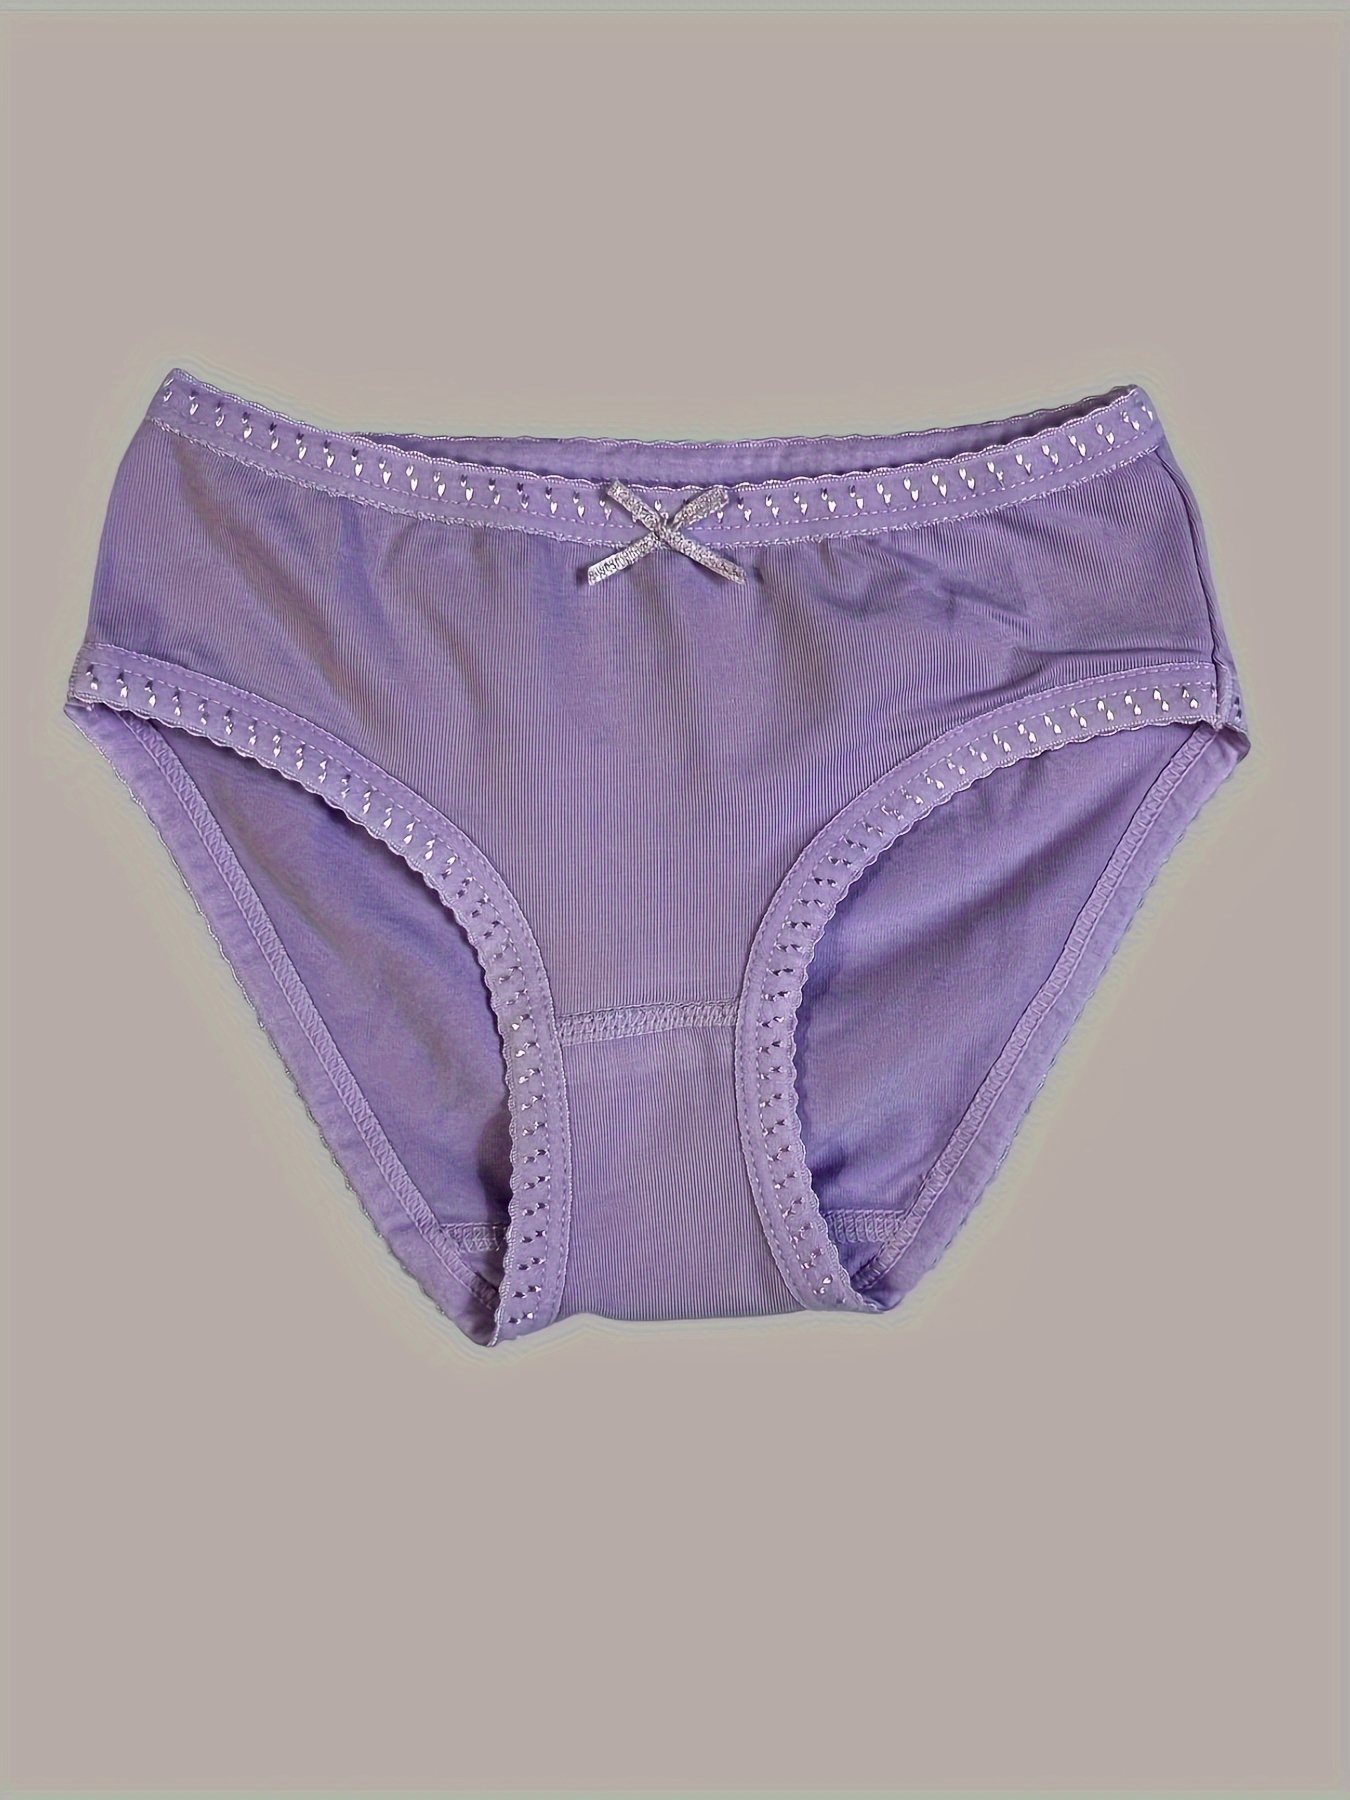 Briefs, 2 Pc Set Of Brand New Women Panty In Cotton Lycra